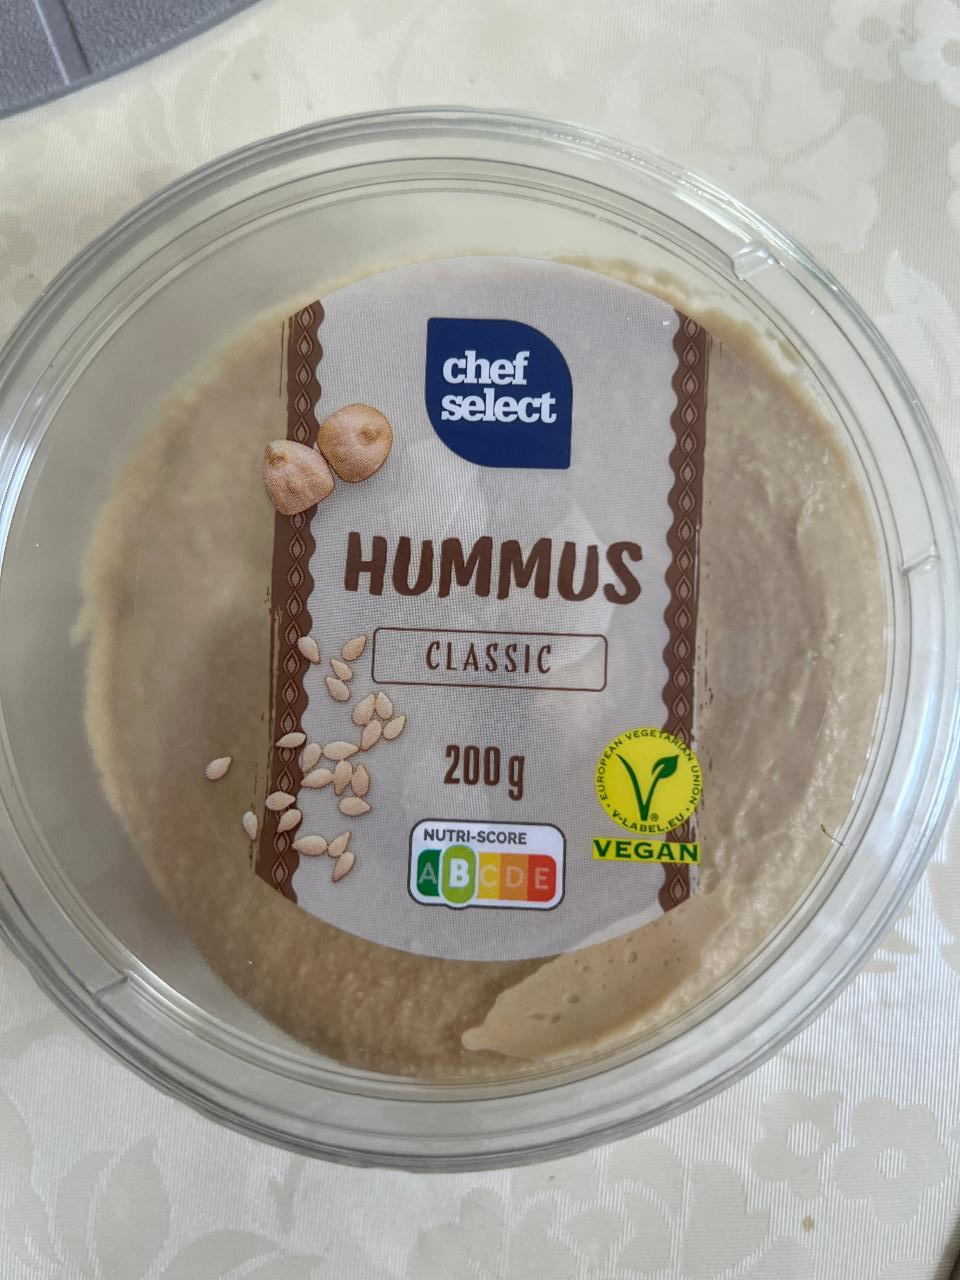 Zdjęcia - Hummus classic Chef select